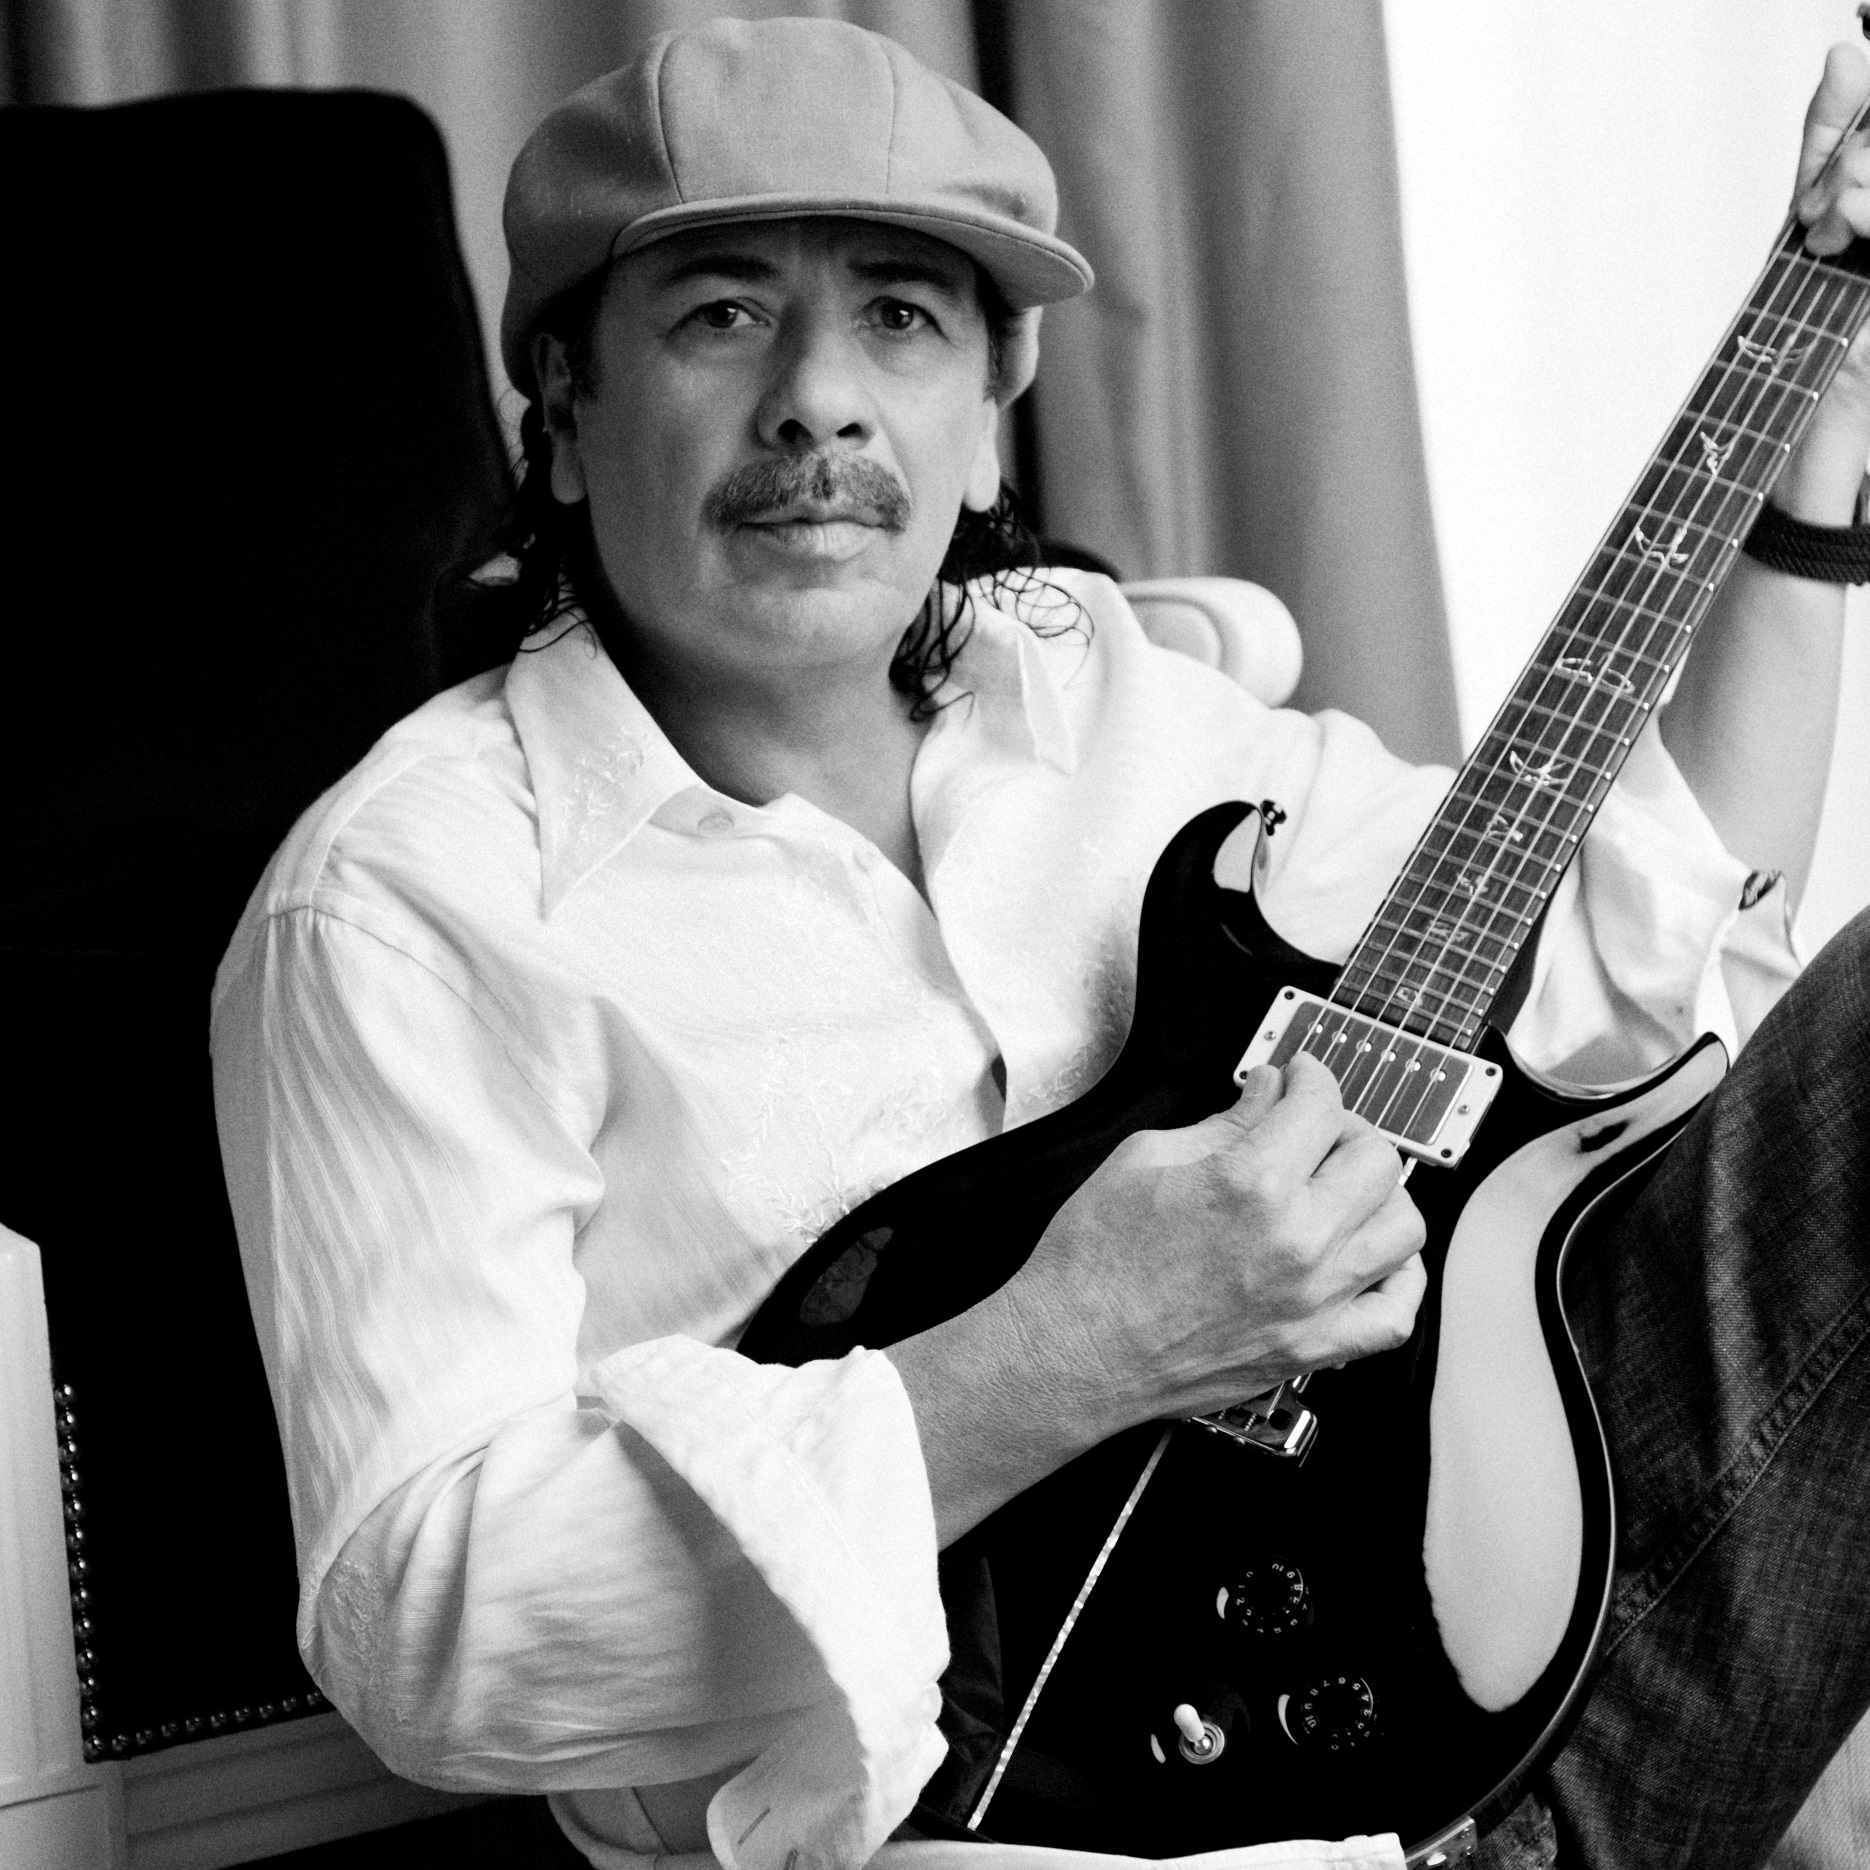 Carlos Santana poses with his guitar wearing a news cap and button-down shirt.